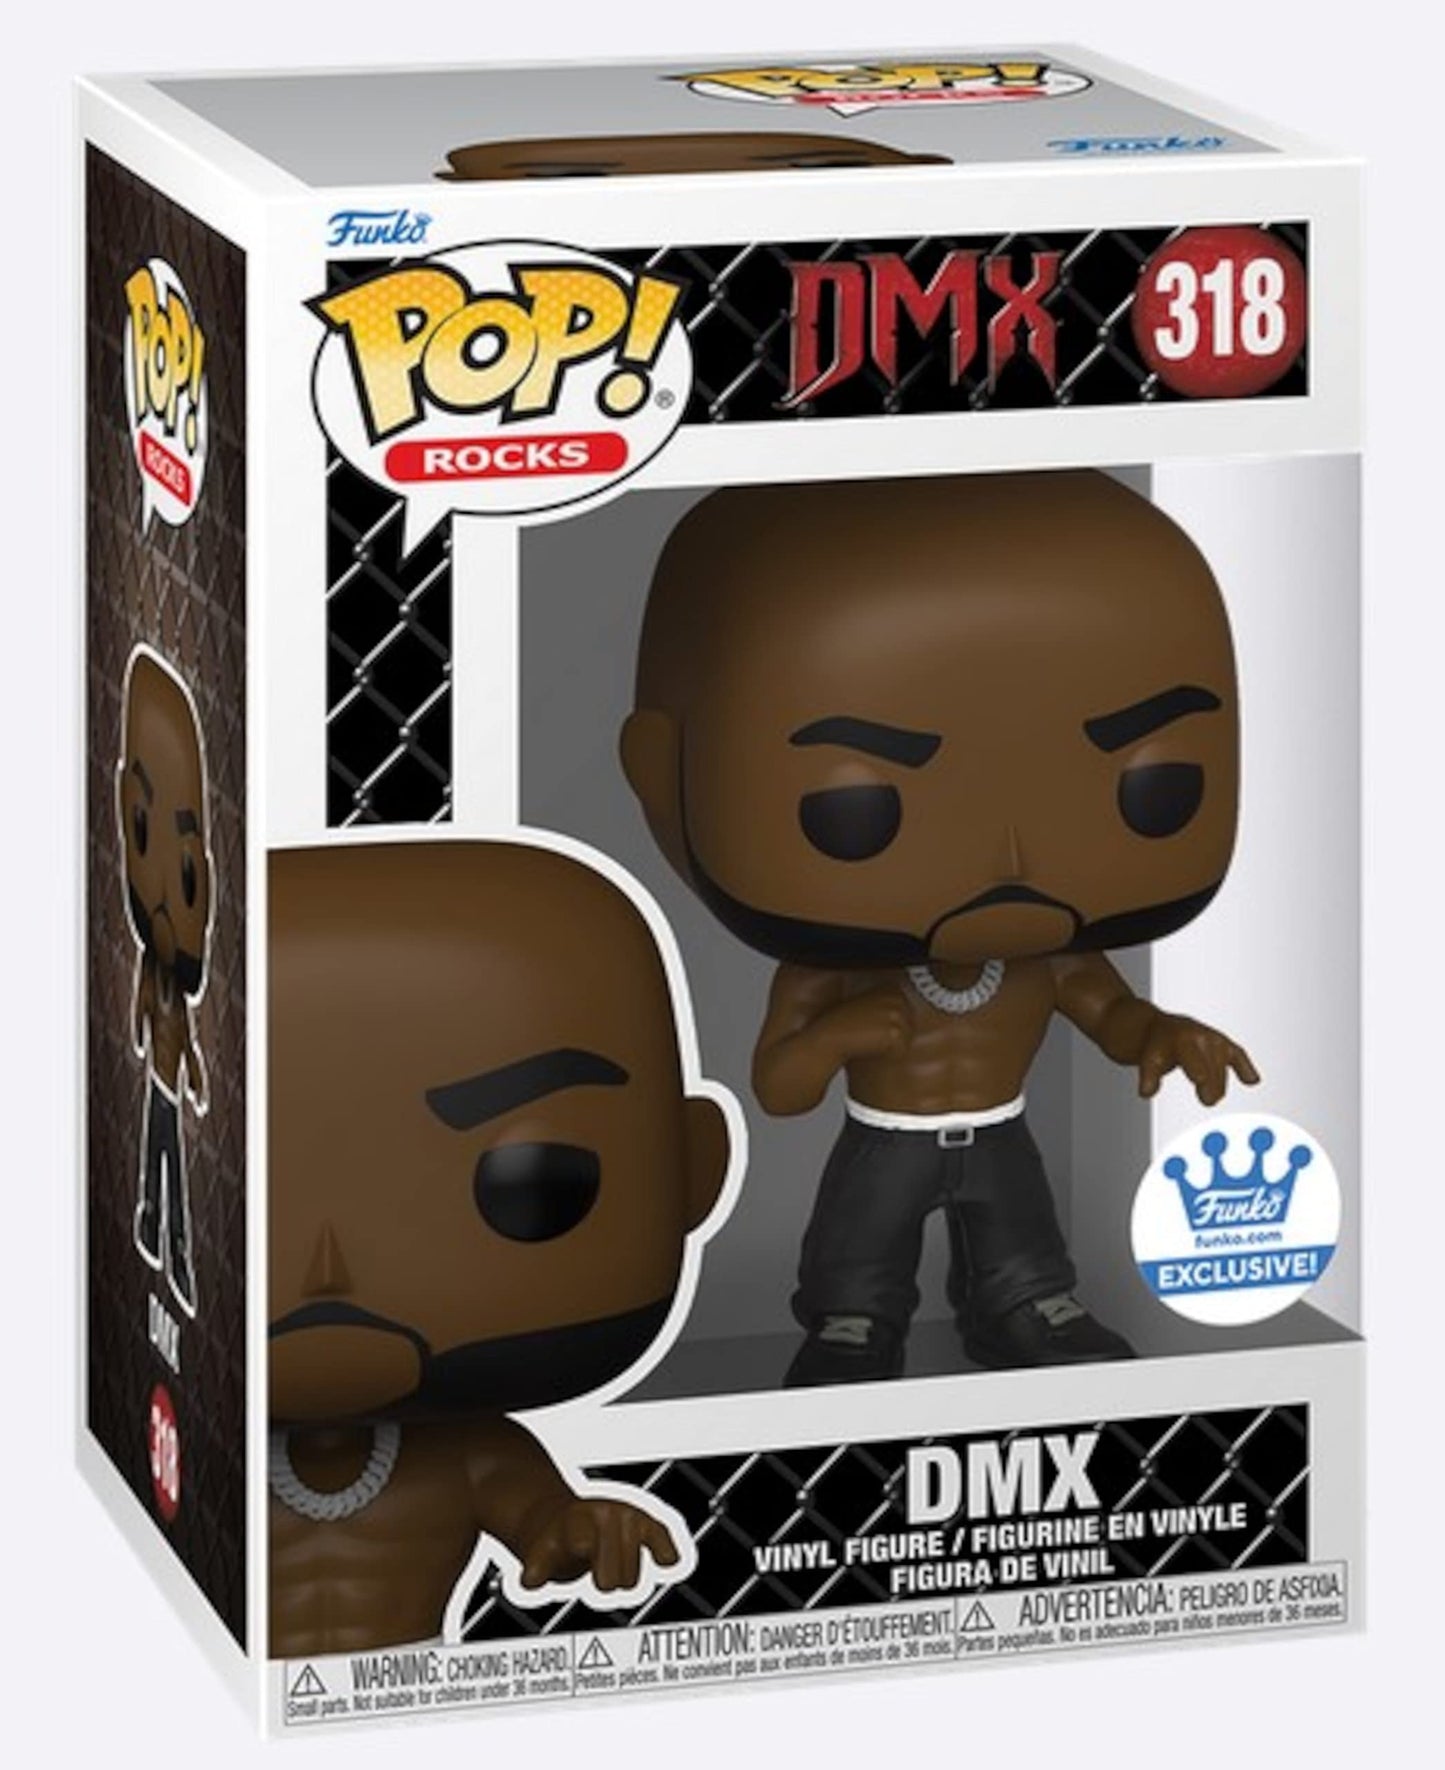 Funko POP! Rocks DMX #318 Exclusive